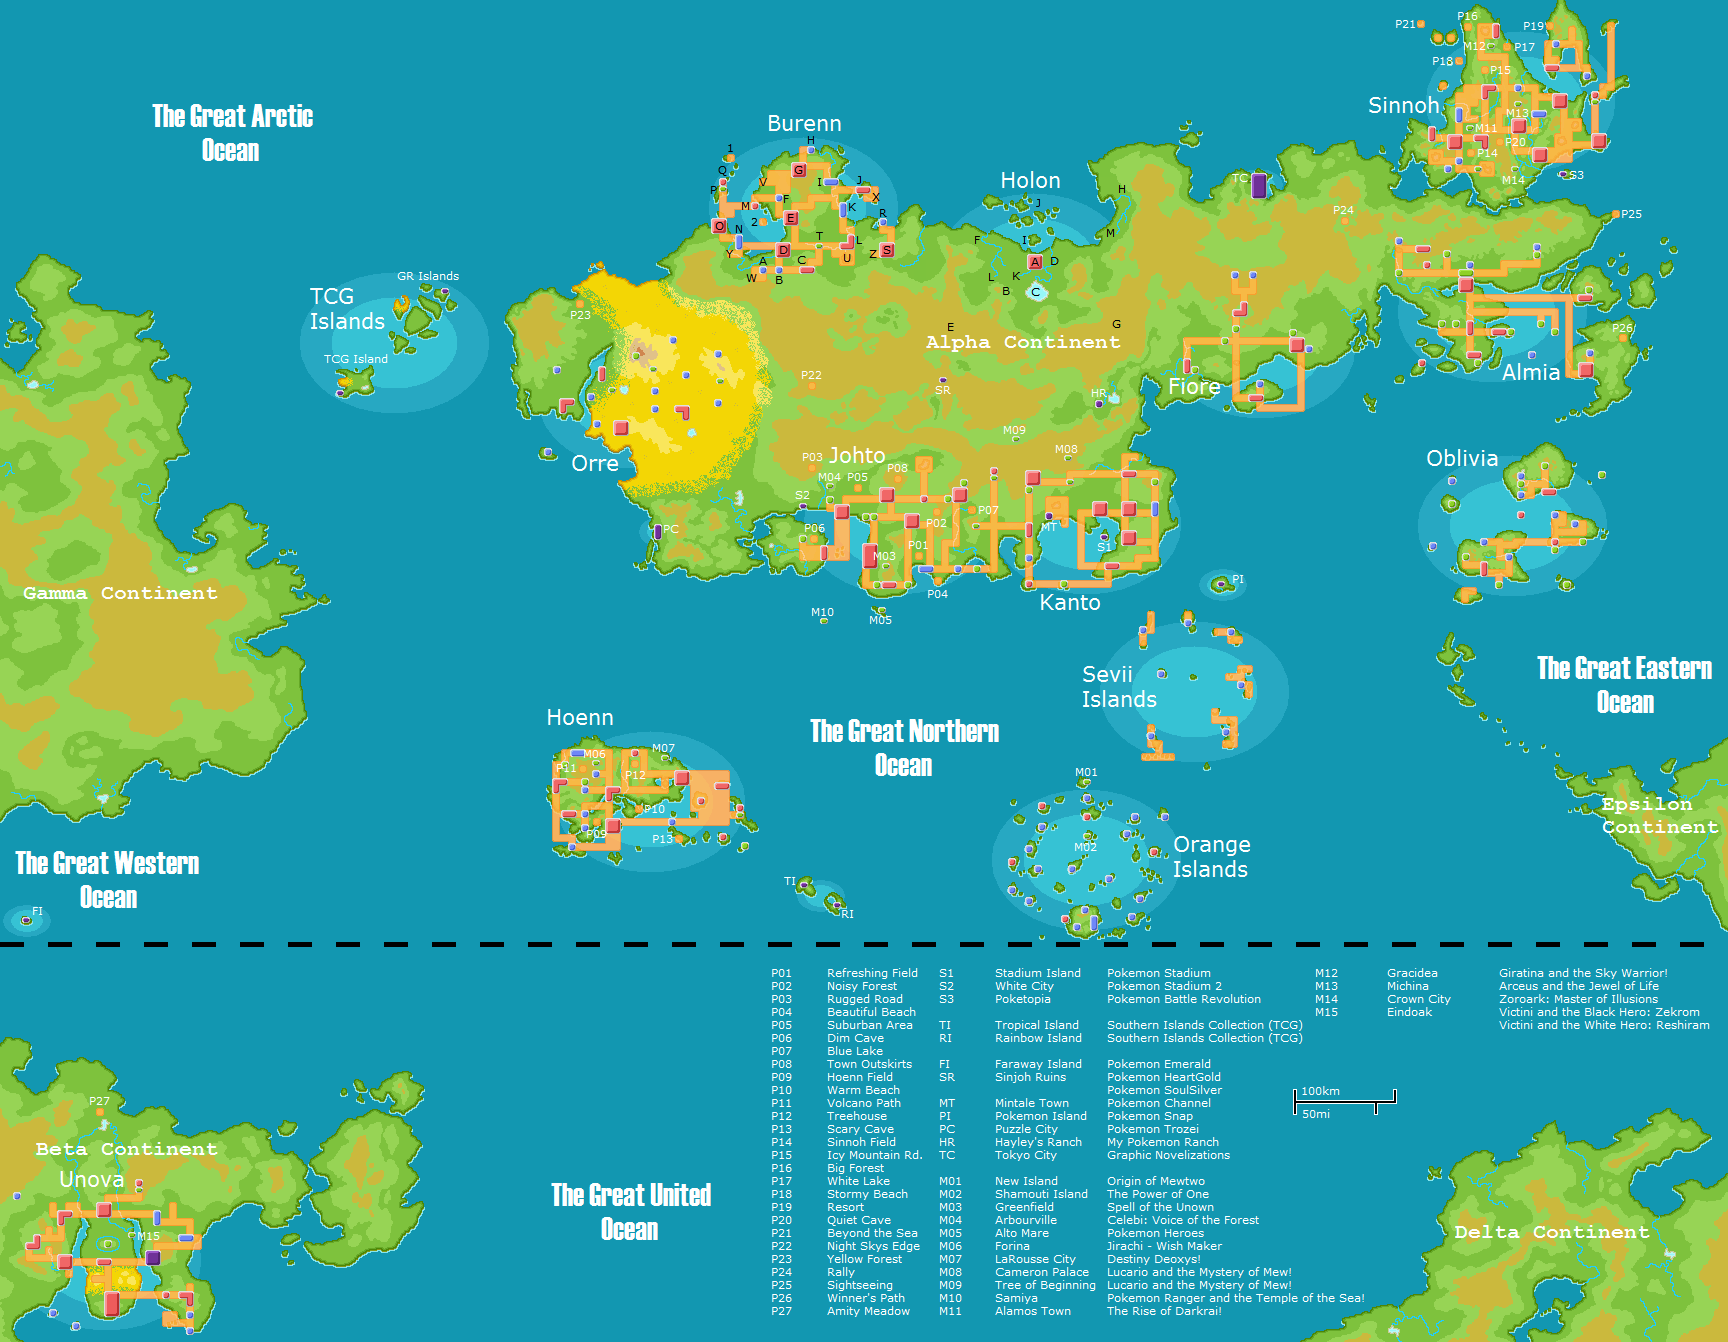 My Pokemon World Map v6.0 by JamisonHartley on DeviantArt